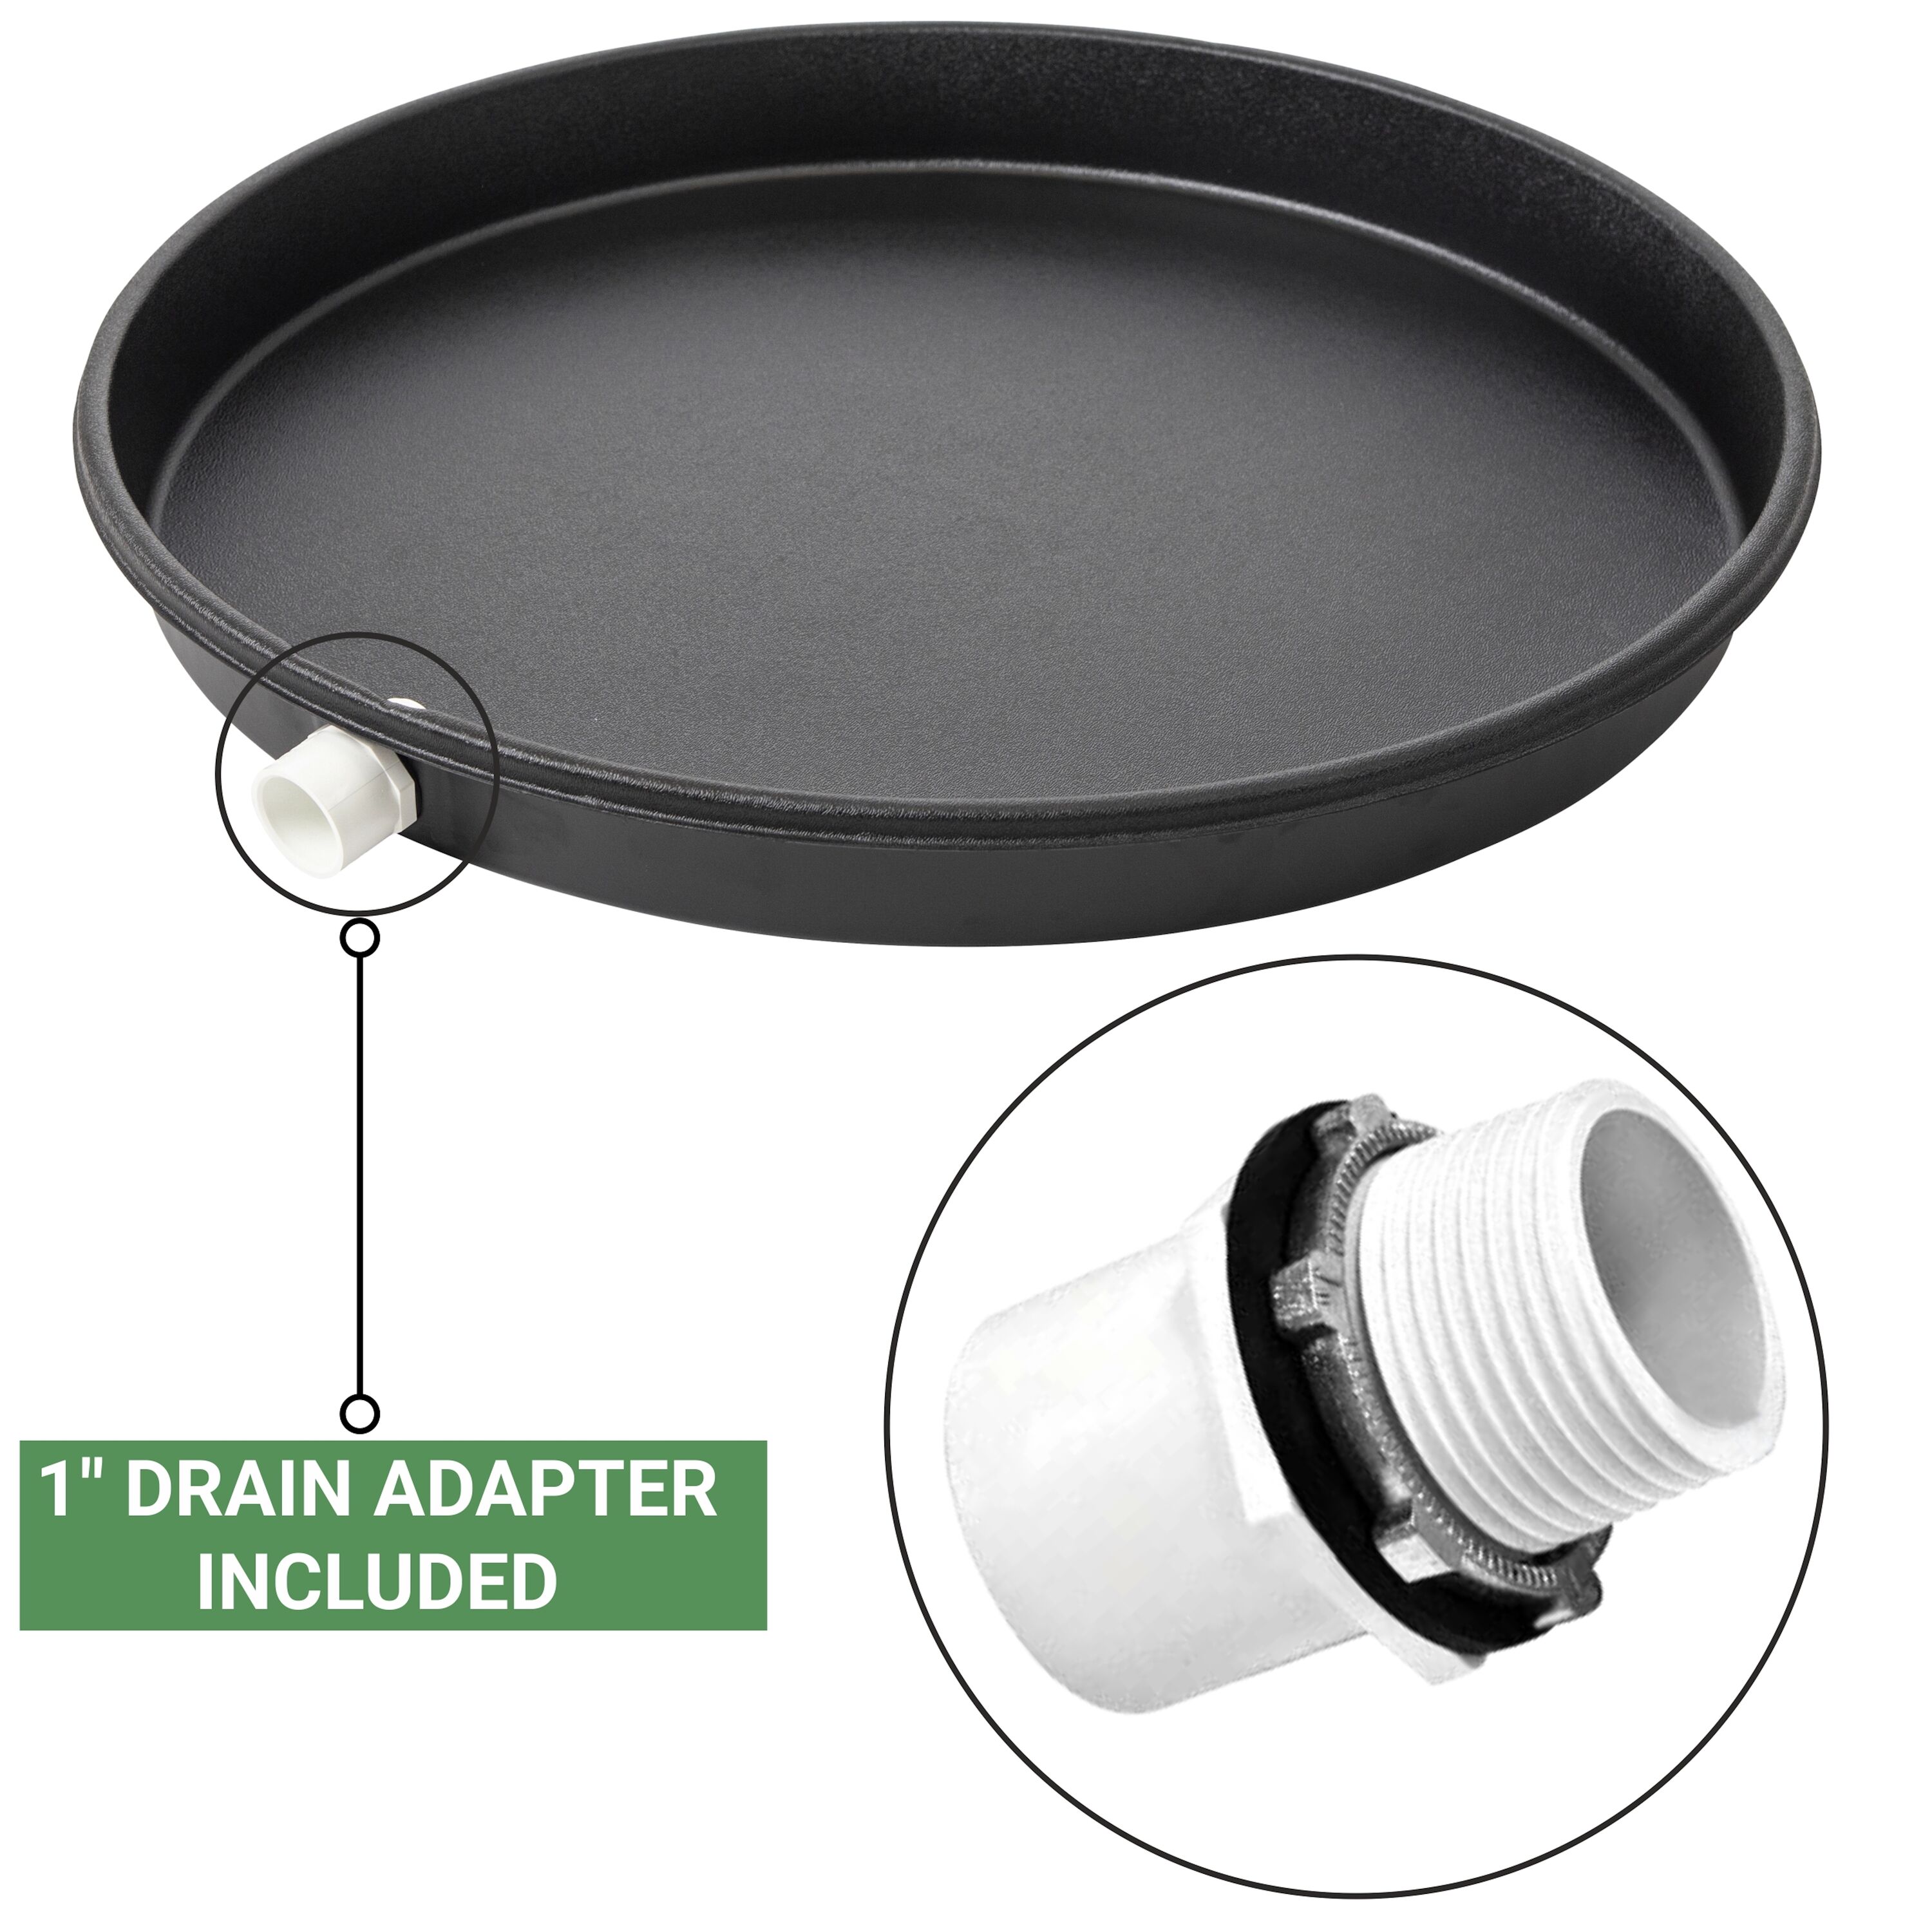 Oatey 34153 Aluminum Water Heater Pan